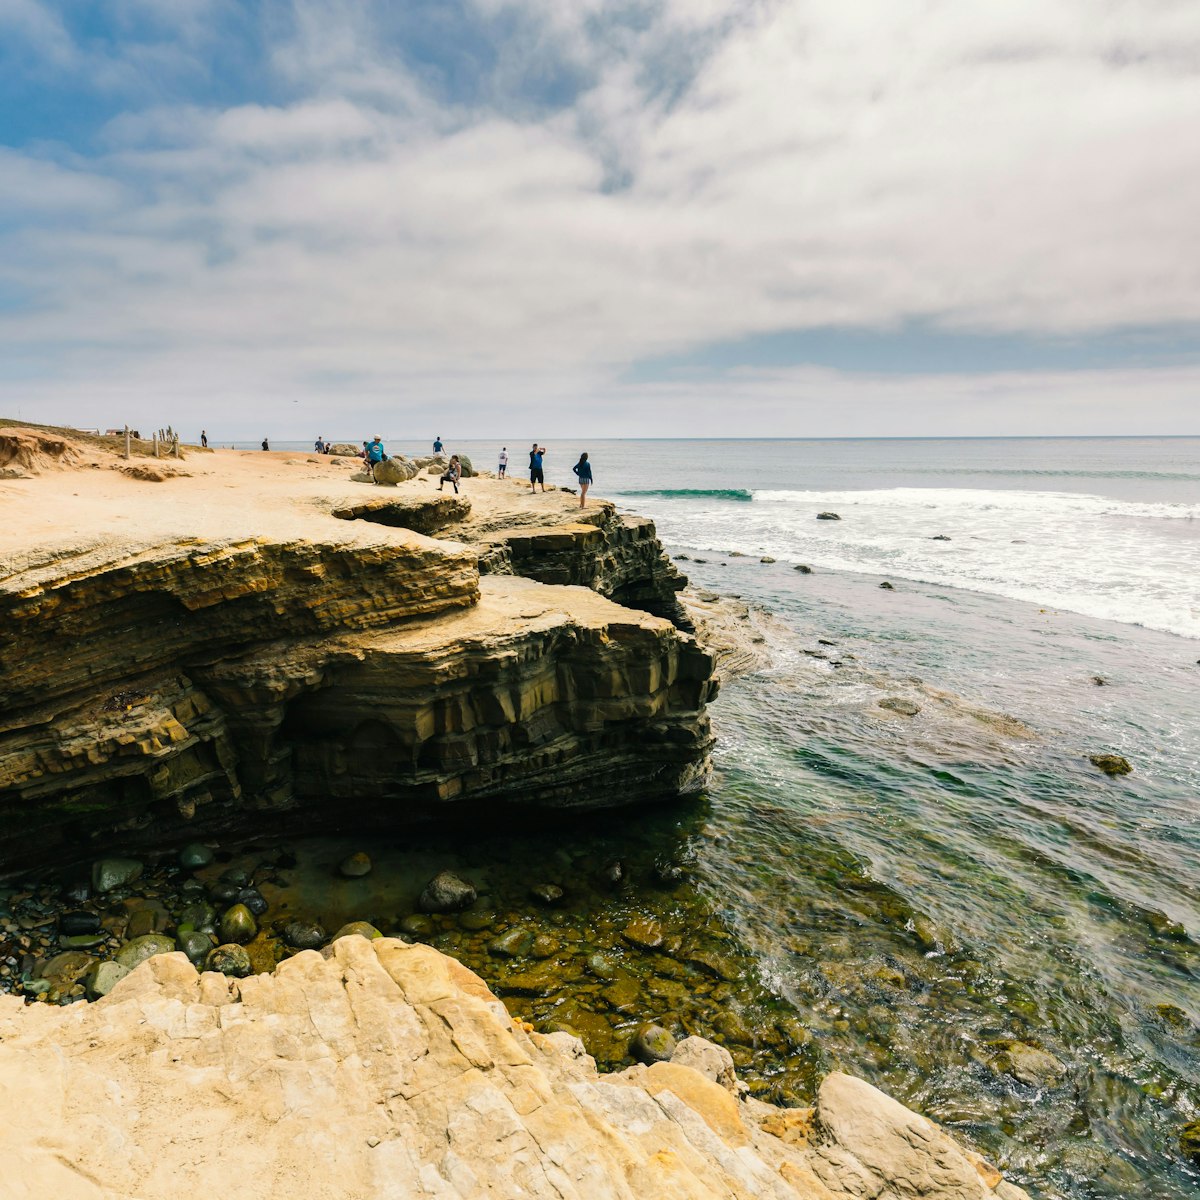 Sandstone Cliffs and ocean view. Point Loma tide pools, San Diego peninsula, California Coastline. San Diego, California/USA - August 13, 2019